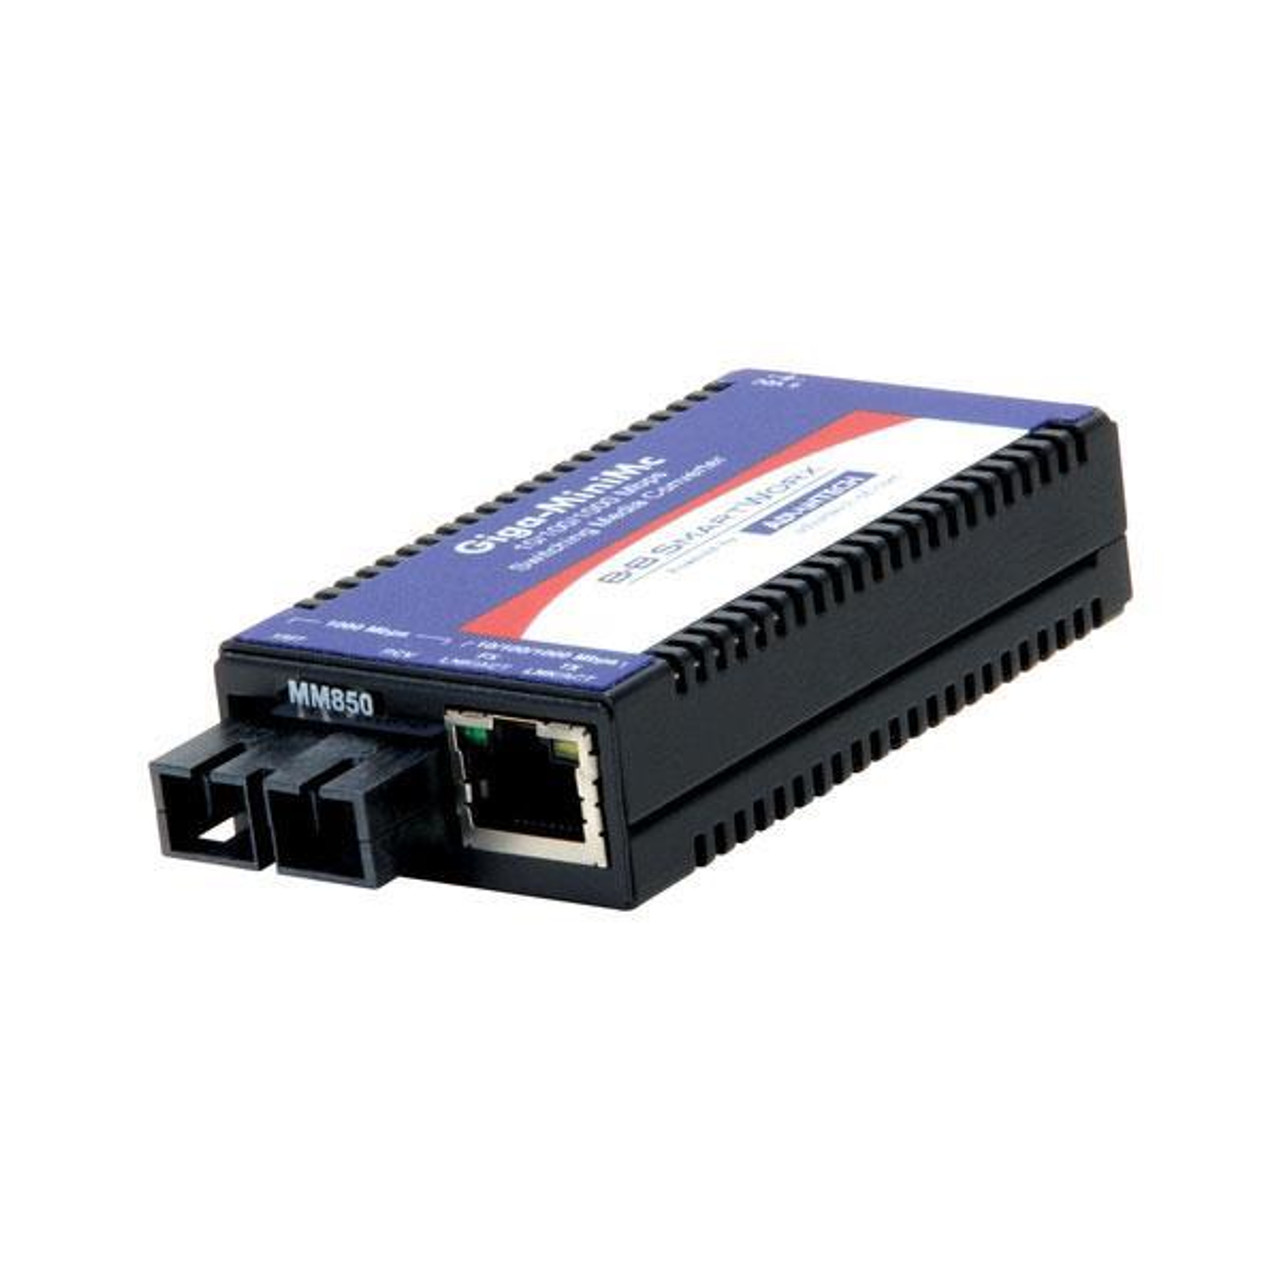 Advantech 10/100/1000Mbps Miniature 1x Network RJ-45 1x SC Ports DuplexSC Port Gigabit Ethernet 10/100/1000Base-TX 1000Base-SSLX DIN Rail Mountable